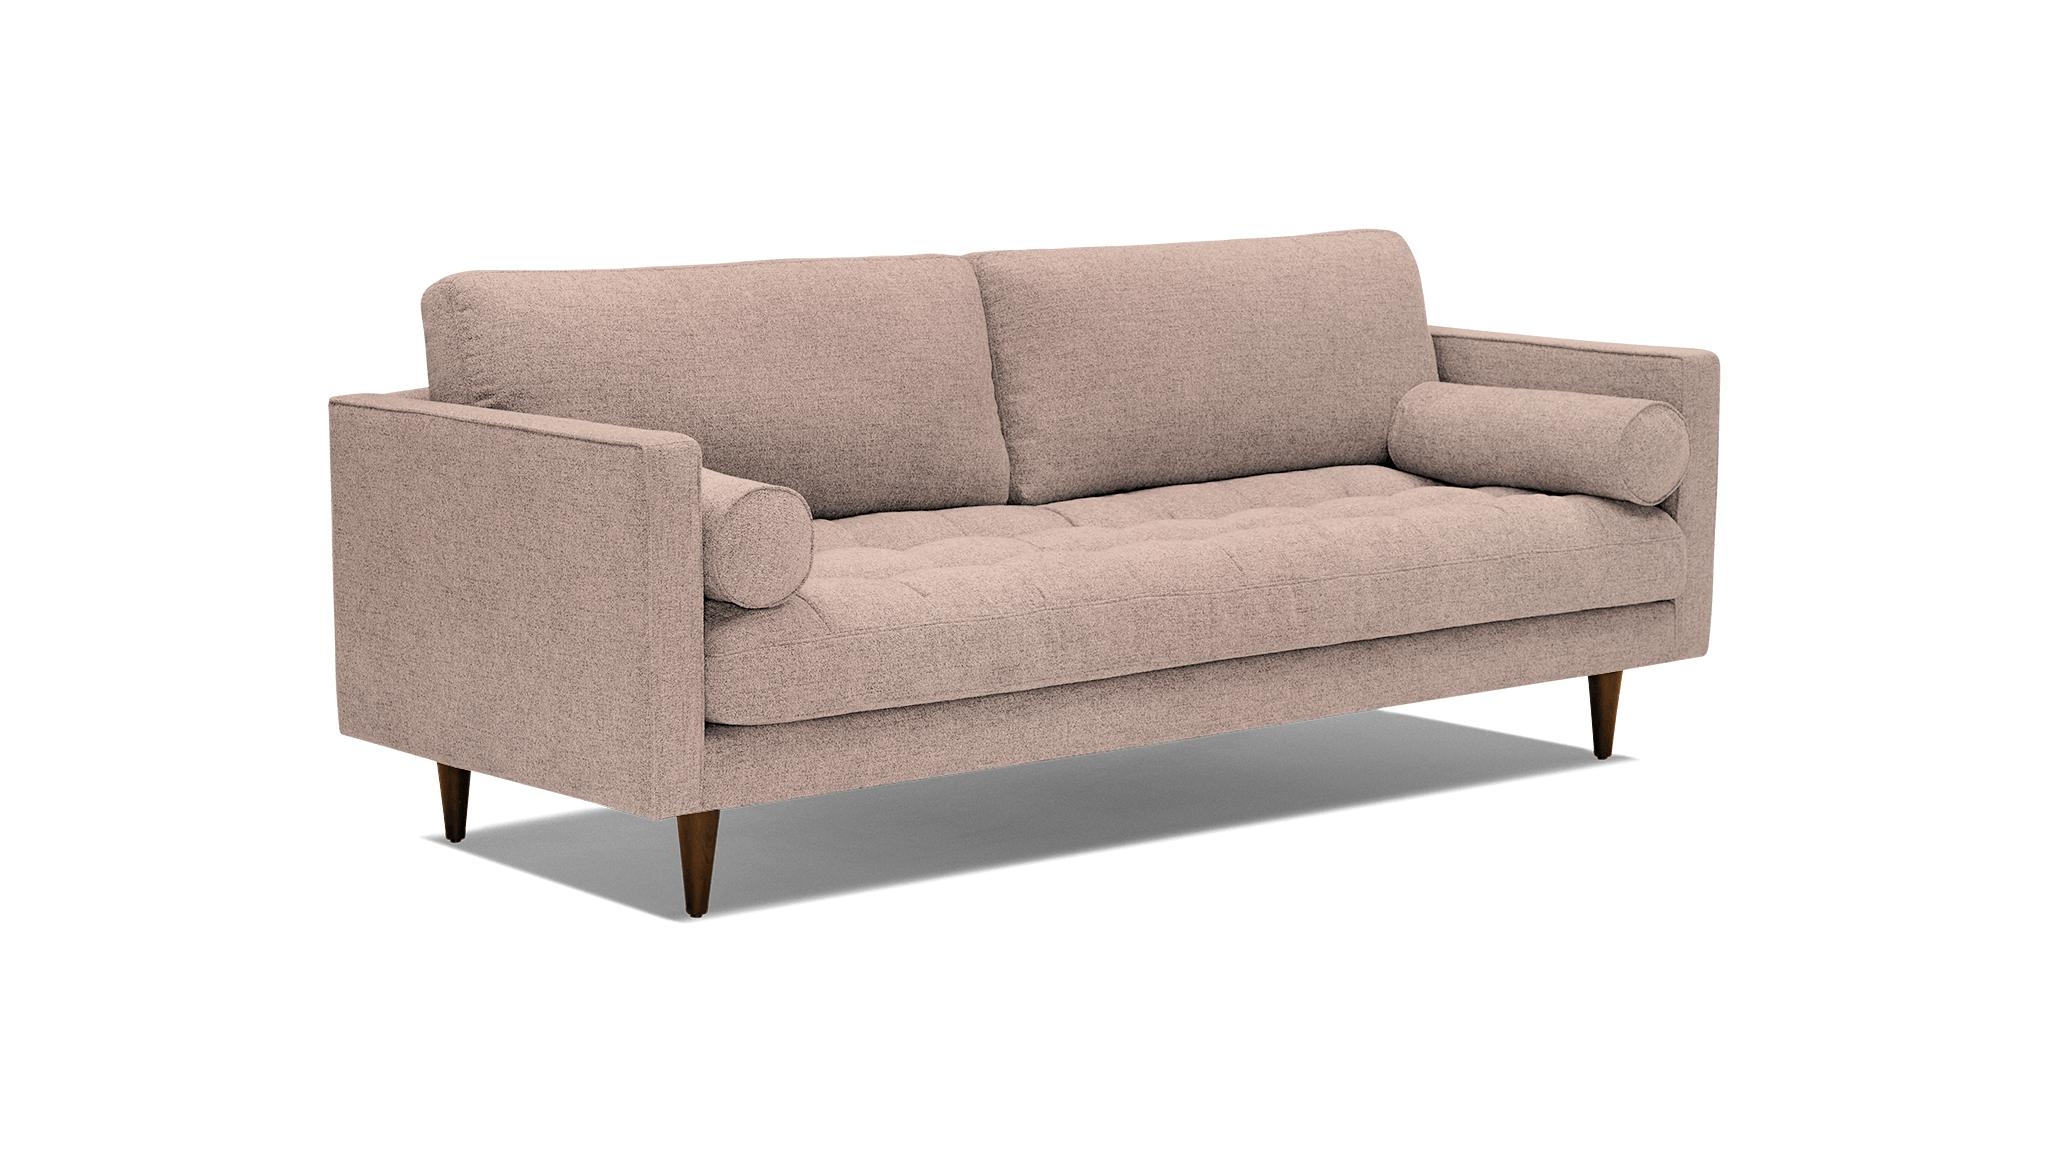 Pink Briar Mid Century Modern Sofa - Prime Blush - Mocha - Image 1